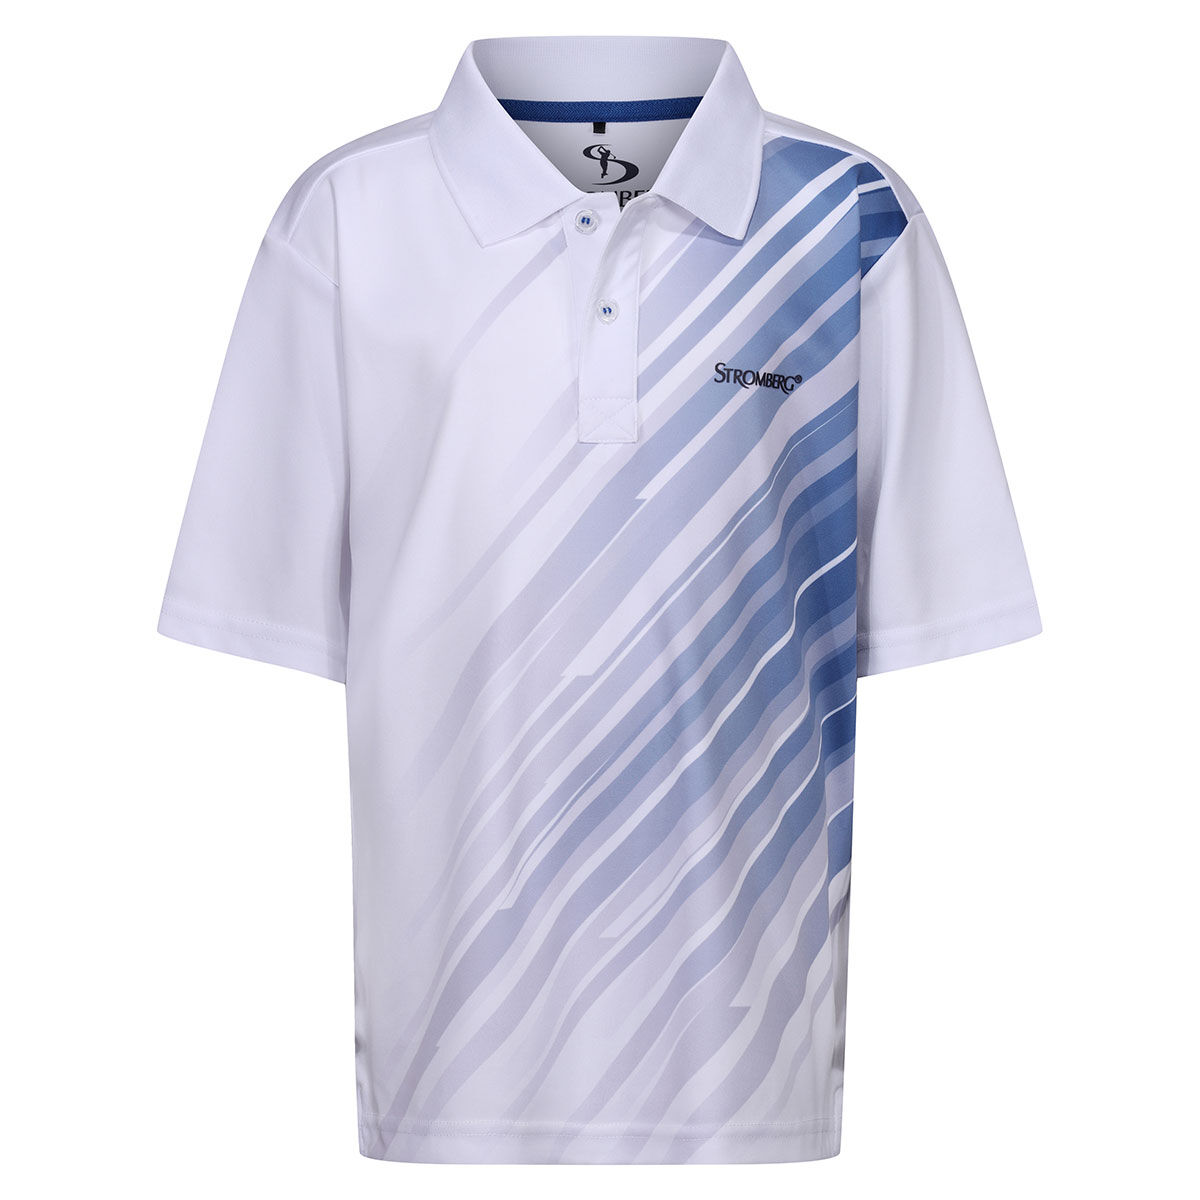 Stromberg Junior Fade Stretch Golf Polo Shirt, Unisex, White/true blue, 9-10 years | American Golf